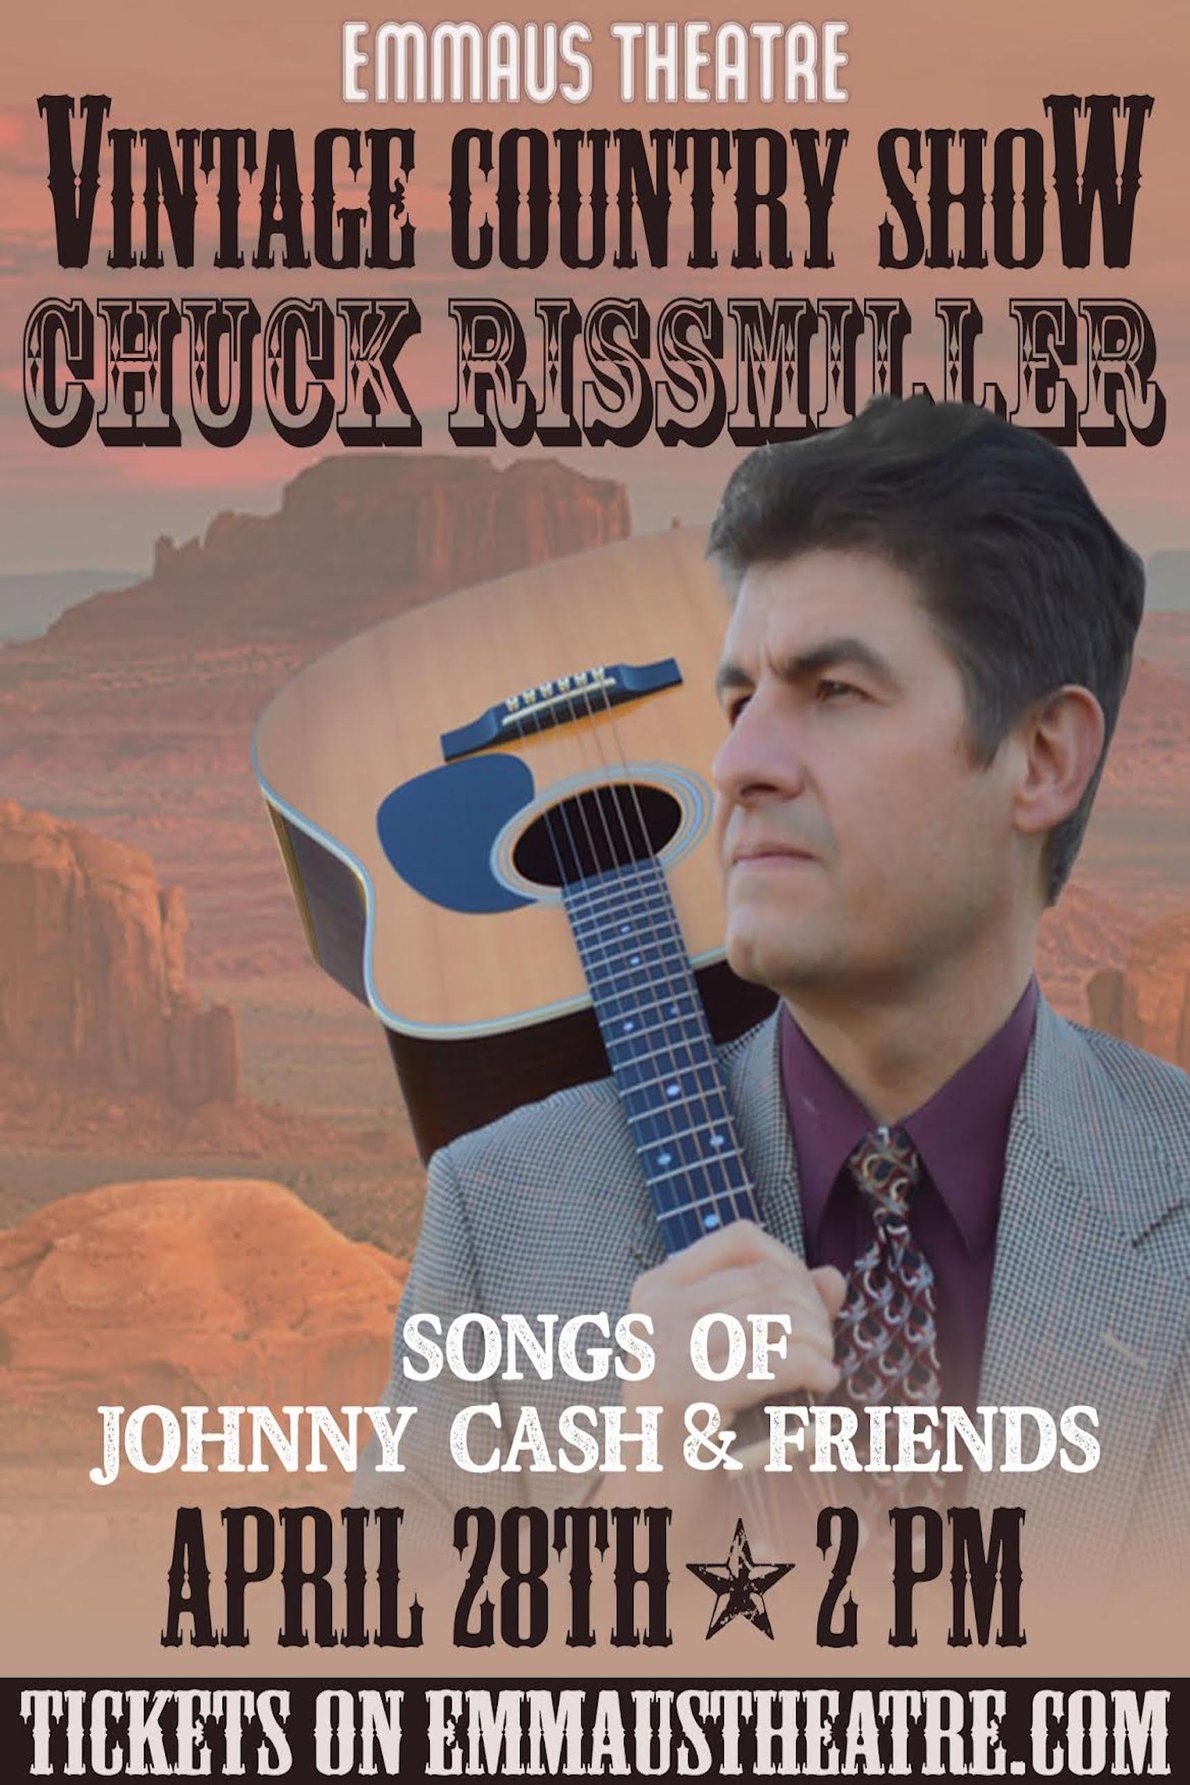 "Songs of Johnny Cash & Friends" by Chuck Rissmiller